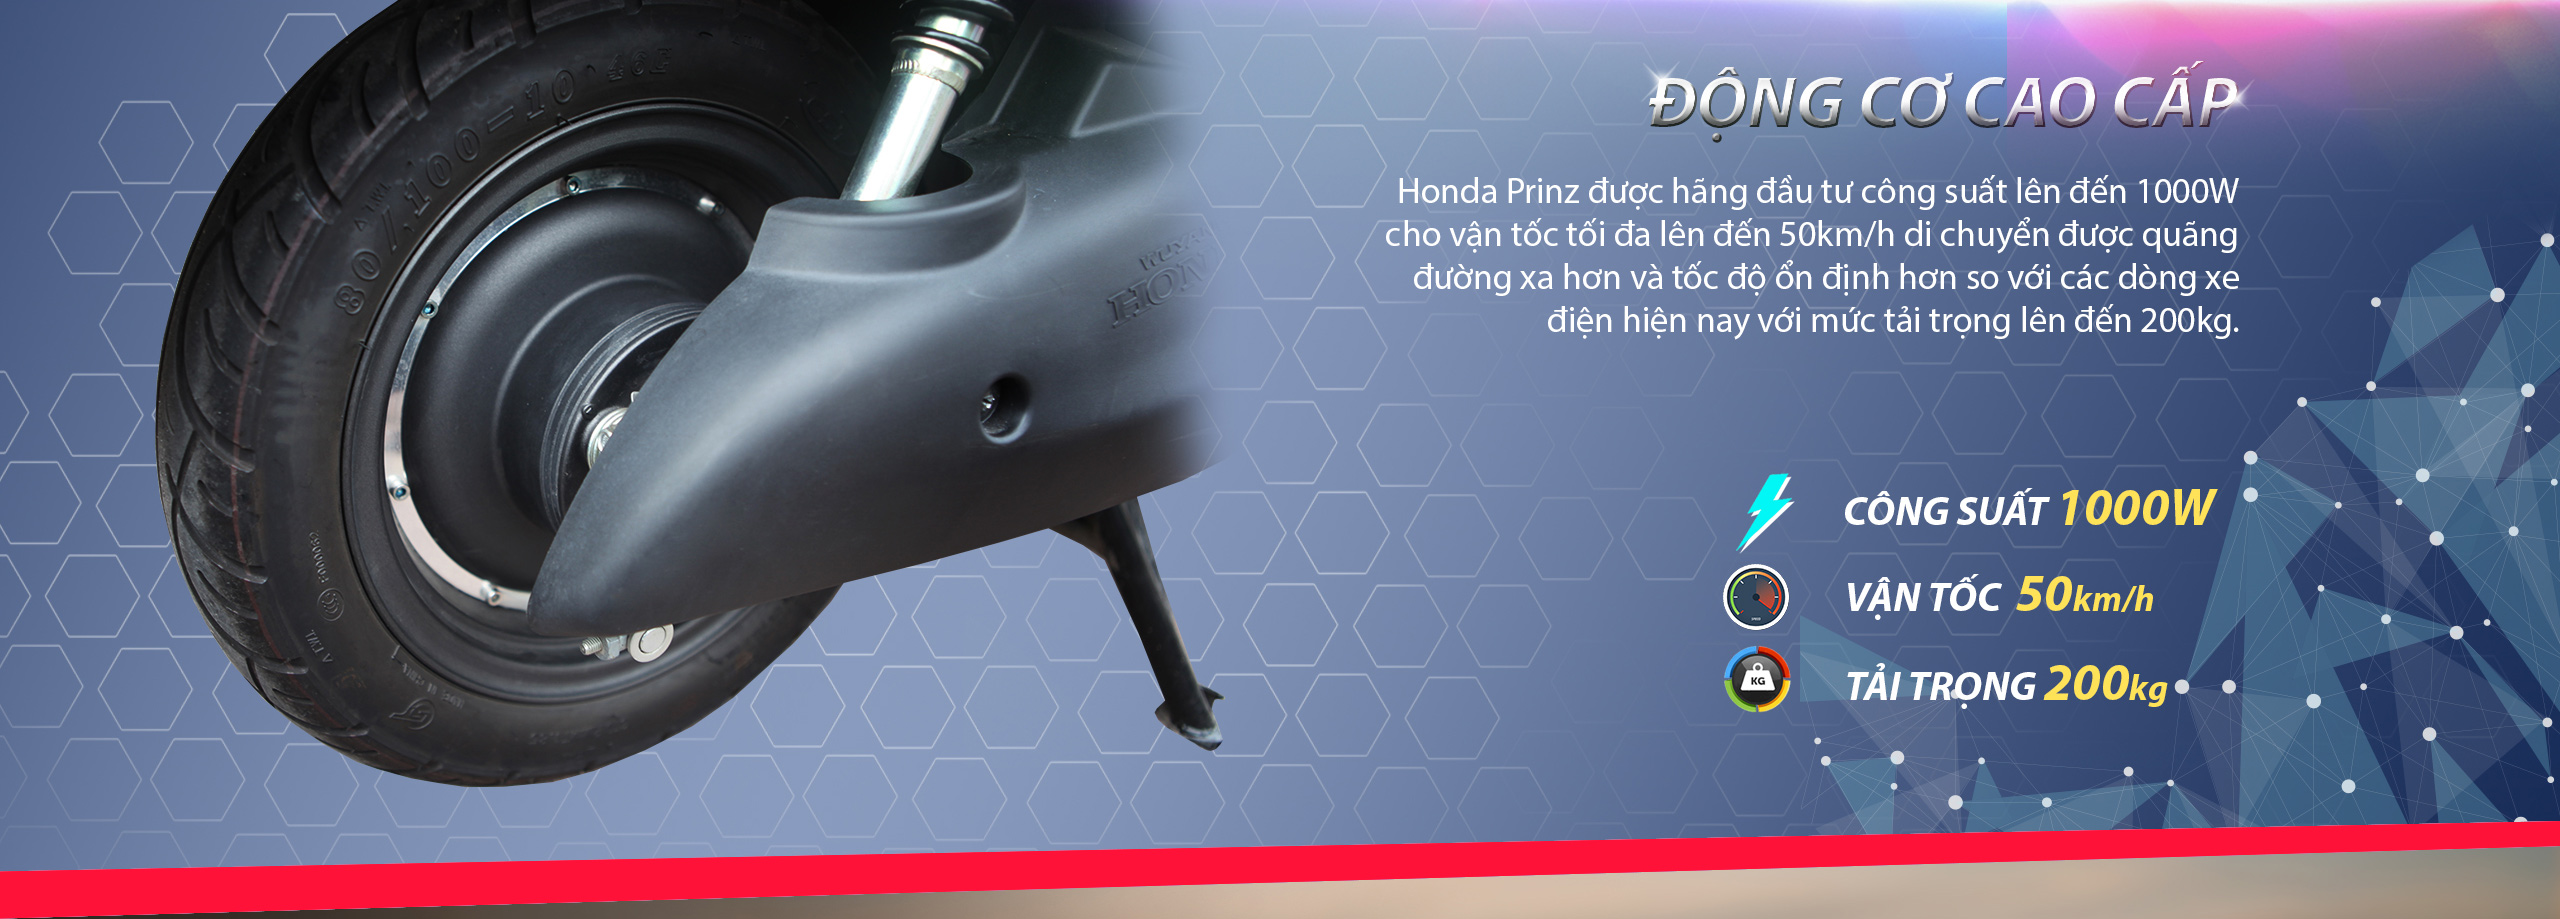 Xe máy điện Honda Prinz